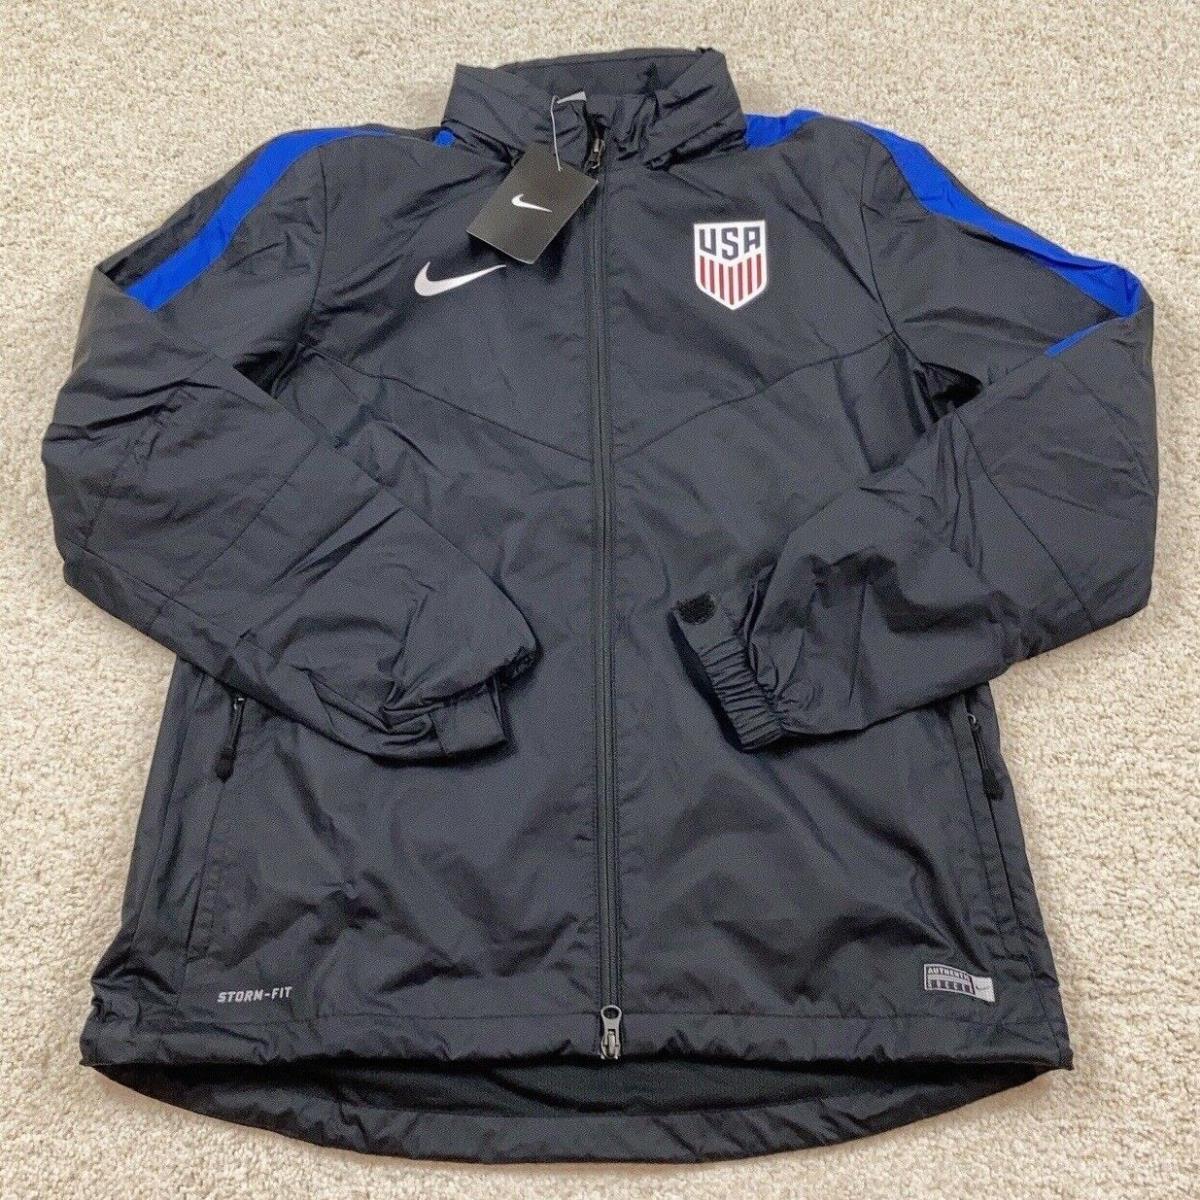 Nike Womens Medium M Team Usa Soccer Full Zip Jacket Storm Fit Black 742430 010